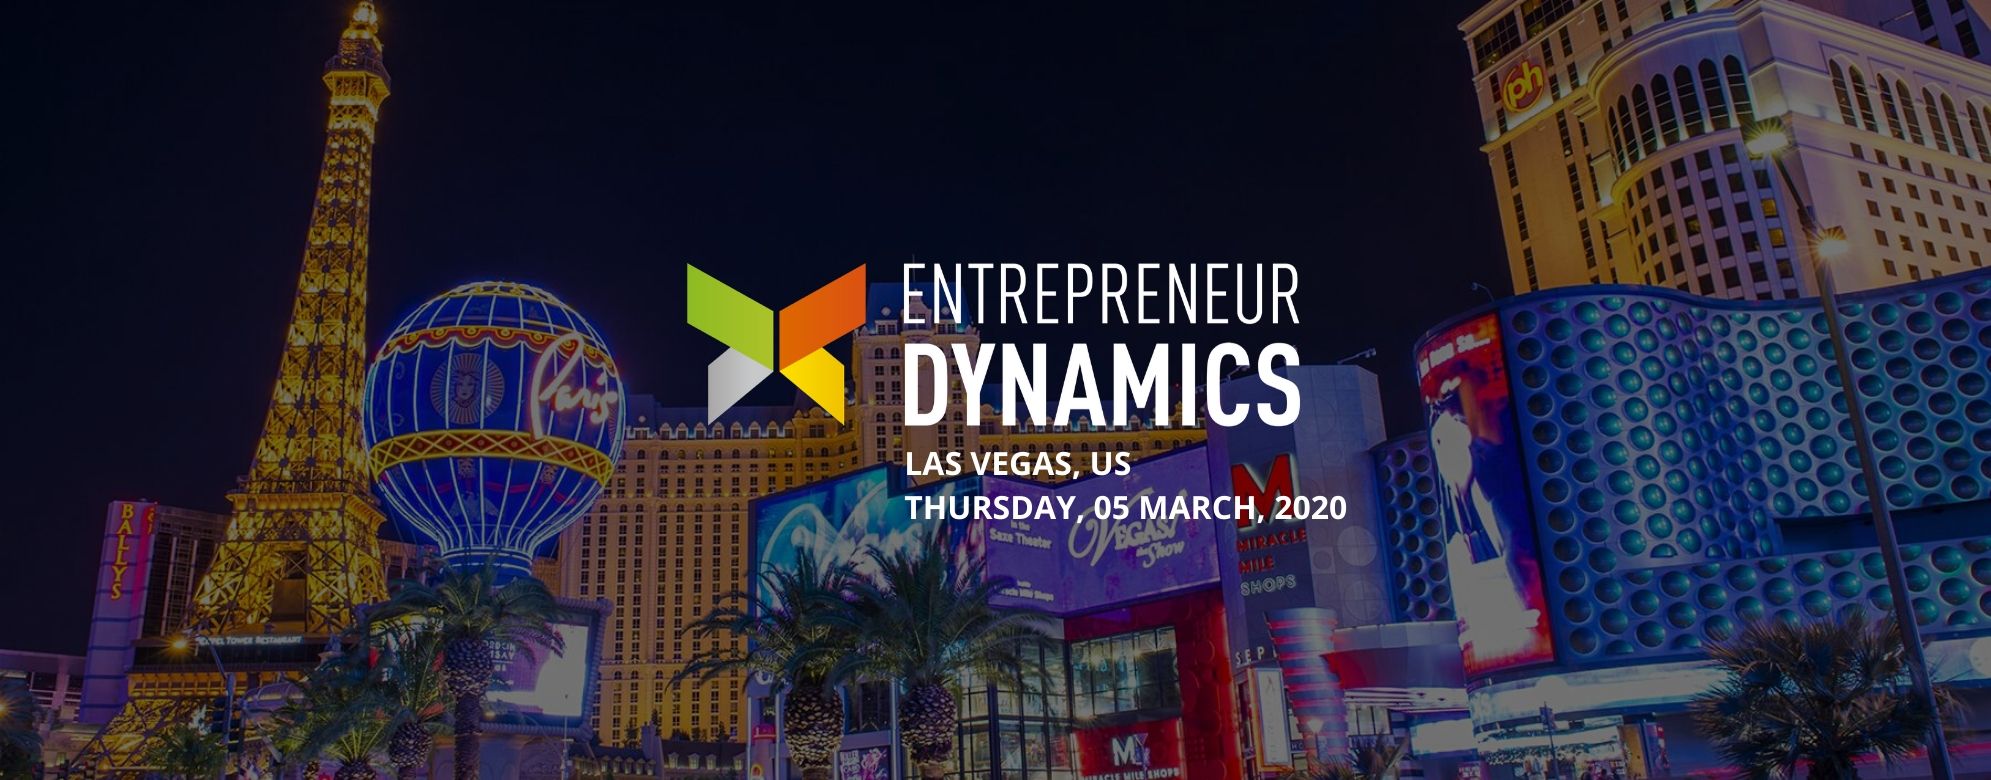 Entrepreneur Dynamics - Las Vegas, US, Las Vegas, Nevada, United States